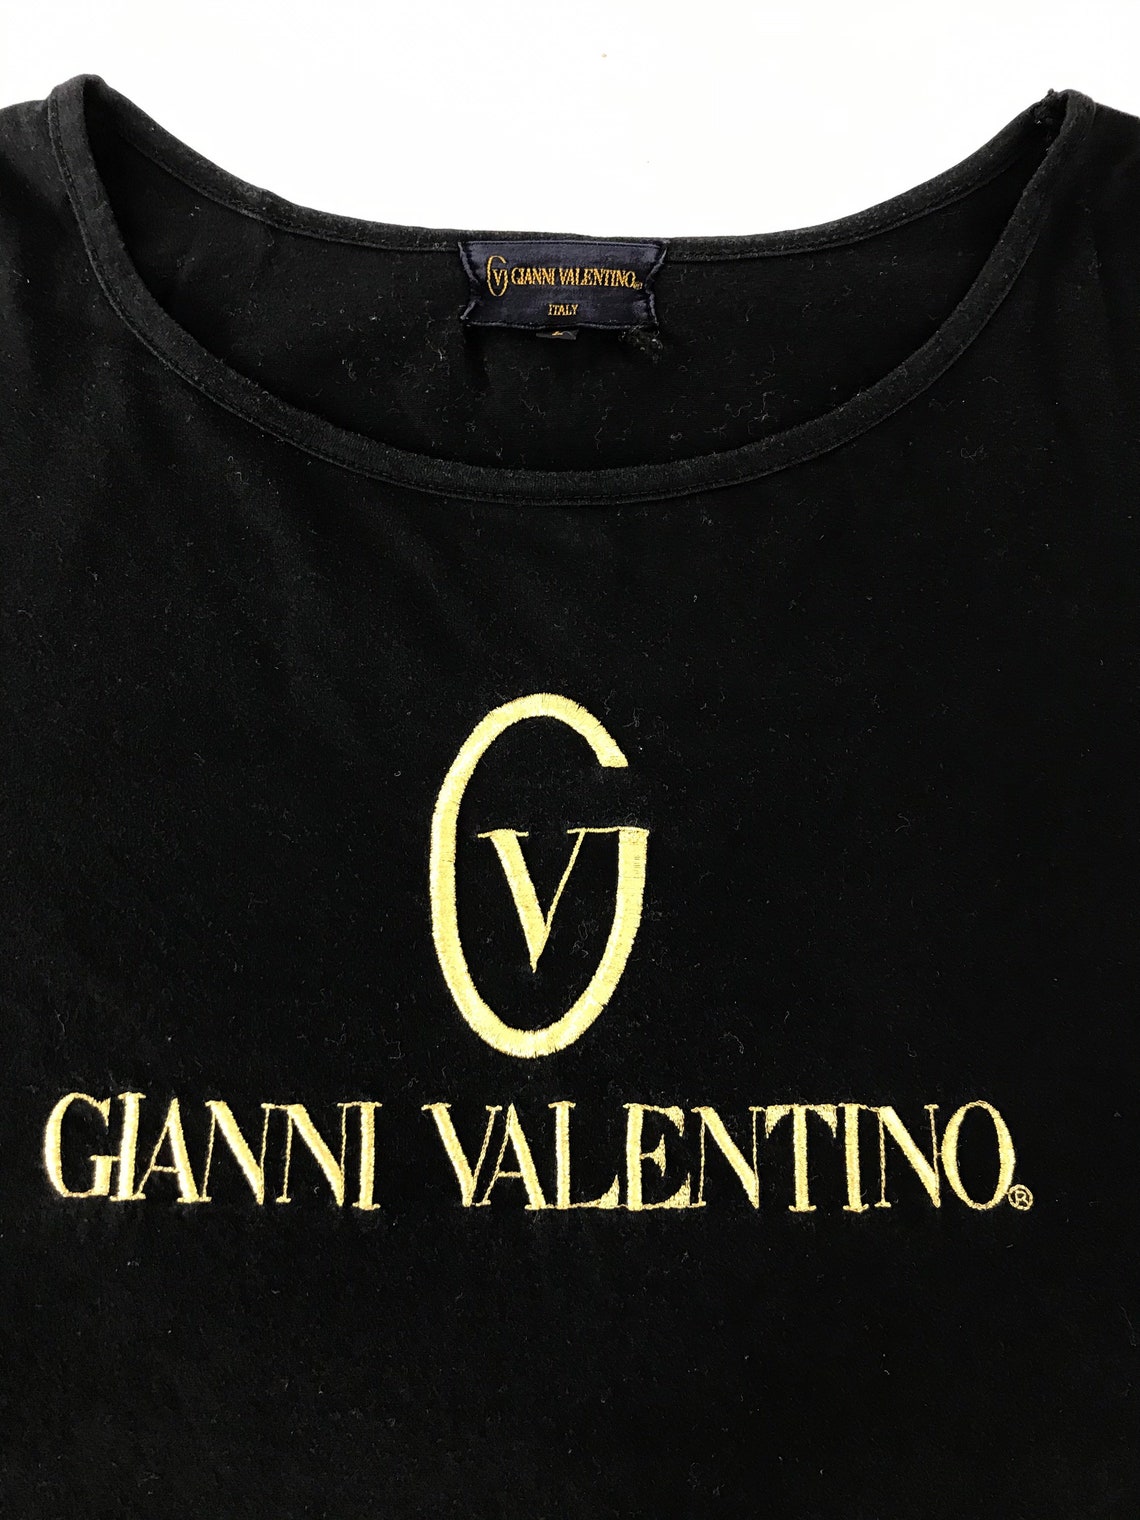 Vintage Gianni Valentino Italy Longsleeve T-shirt Tee | Etsy